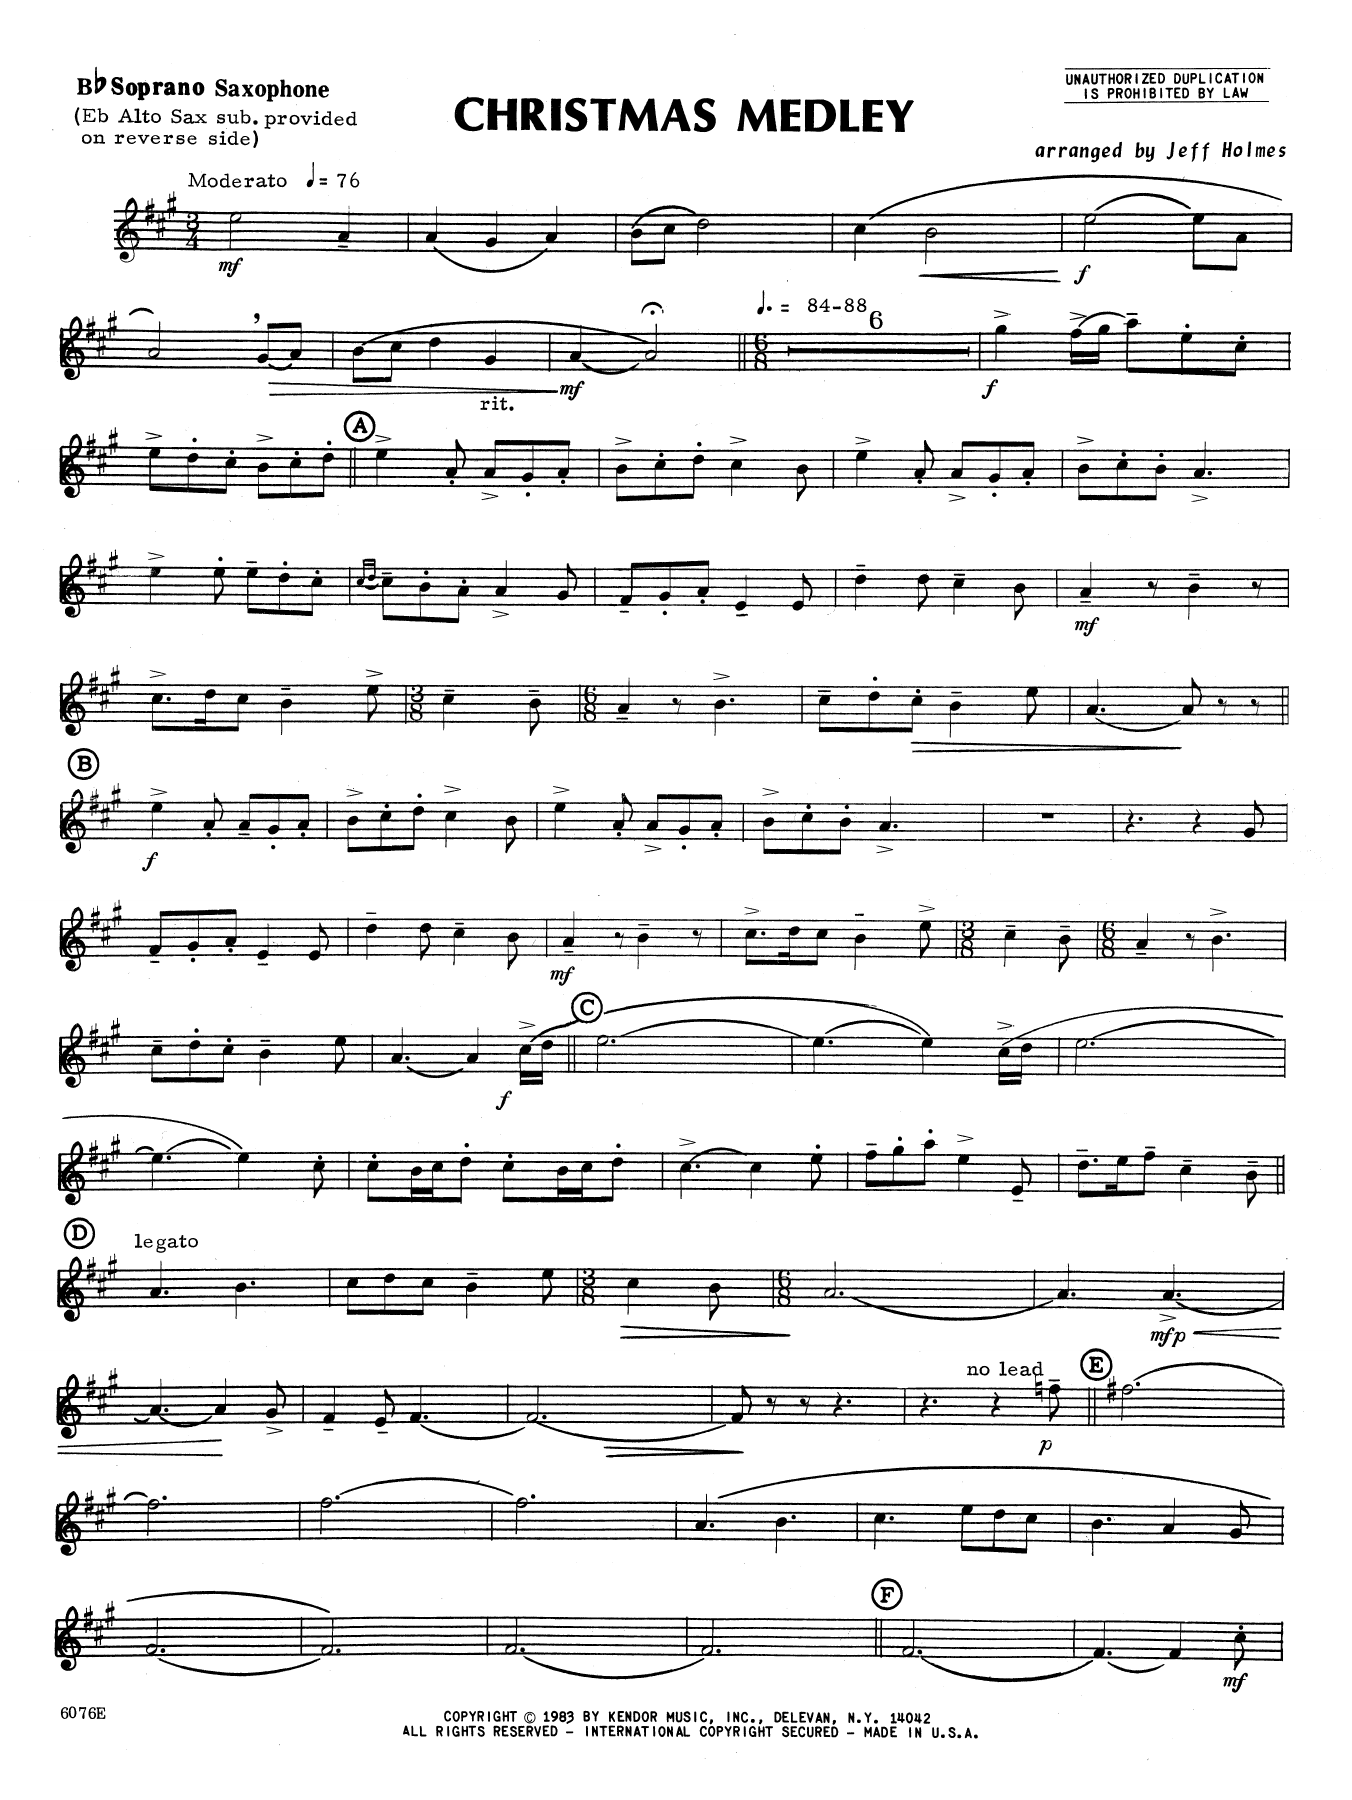 Holmes Christmas Medley - Bb Soprano Sax sheet music notes and chords. Download Printable PDF.